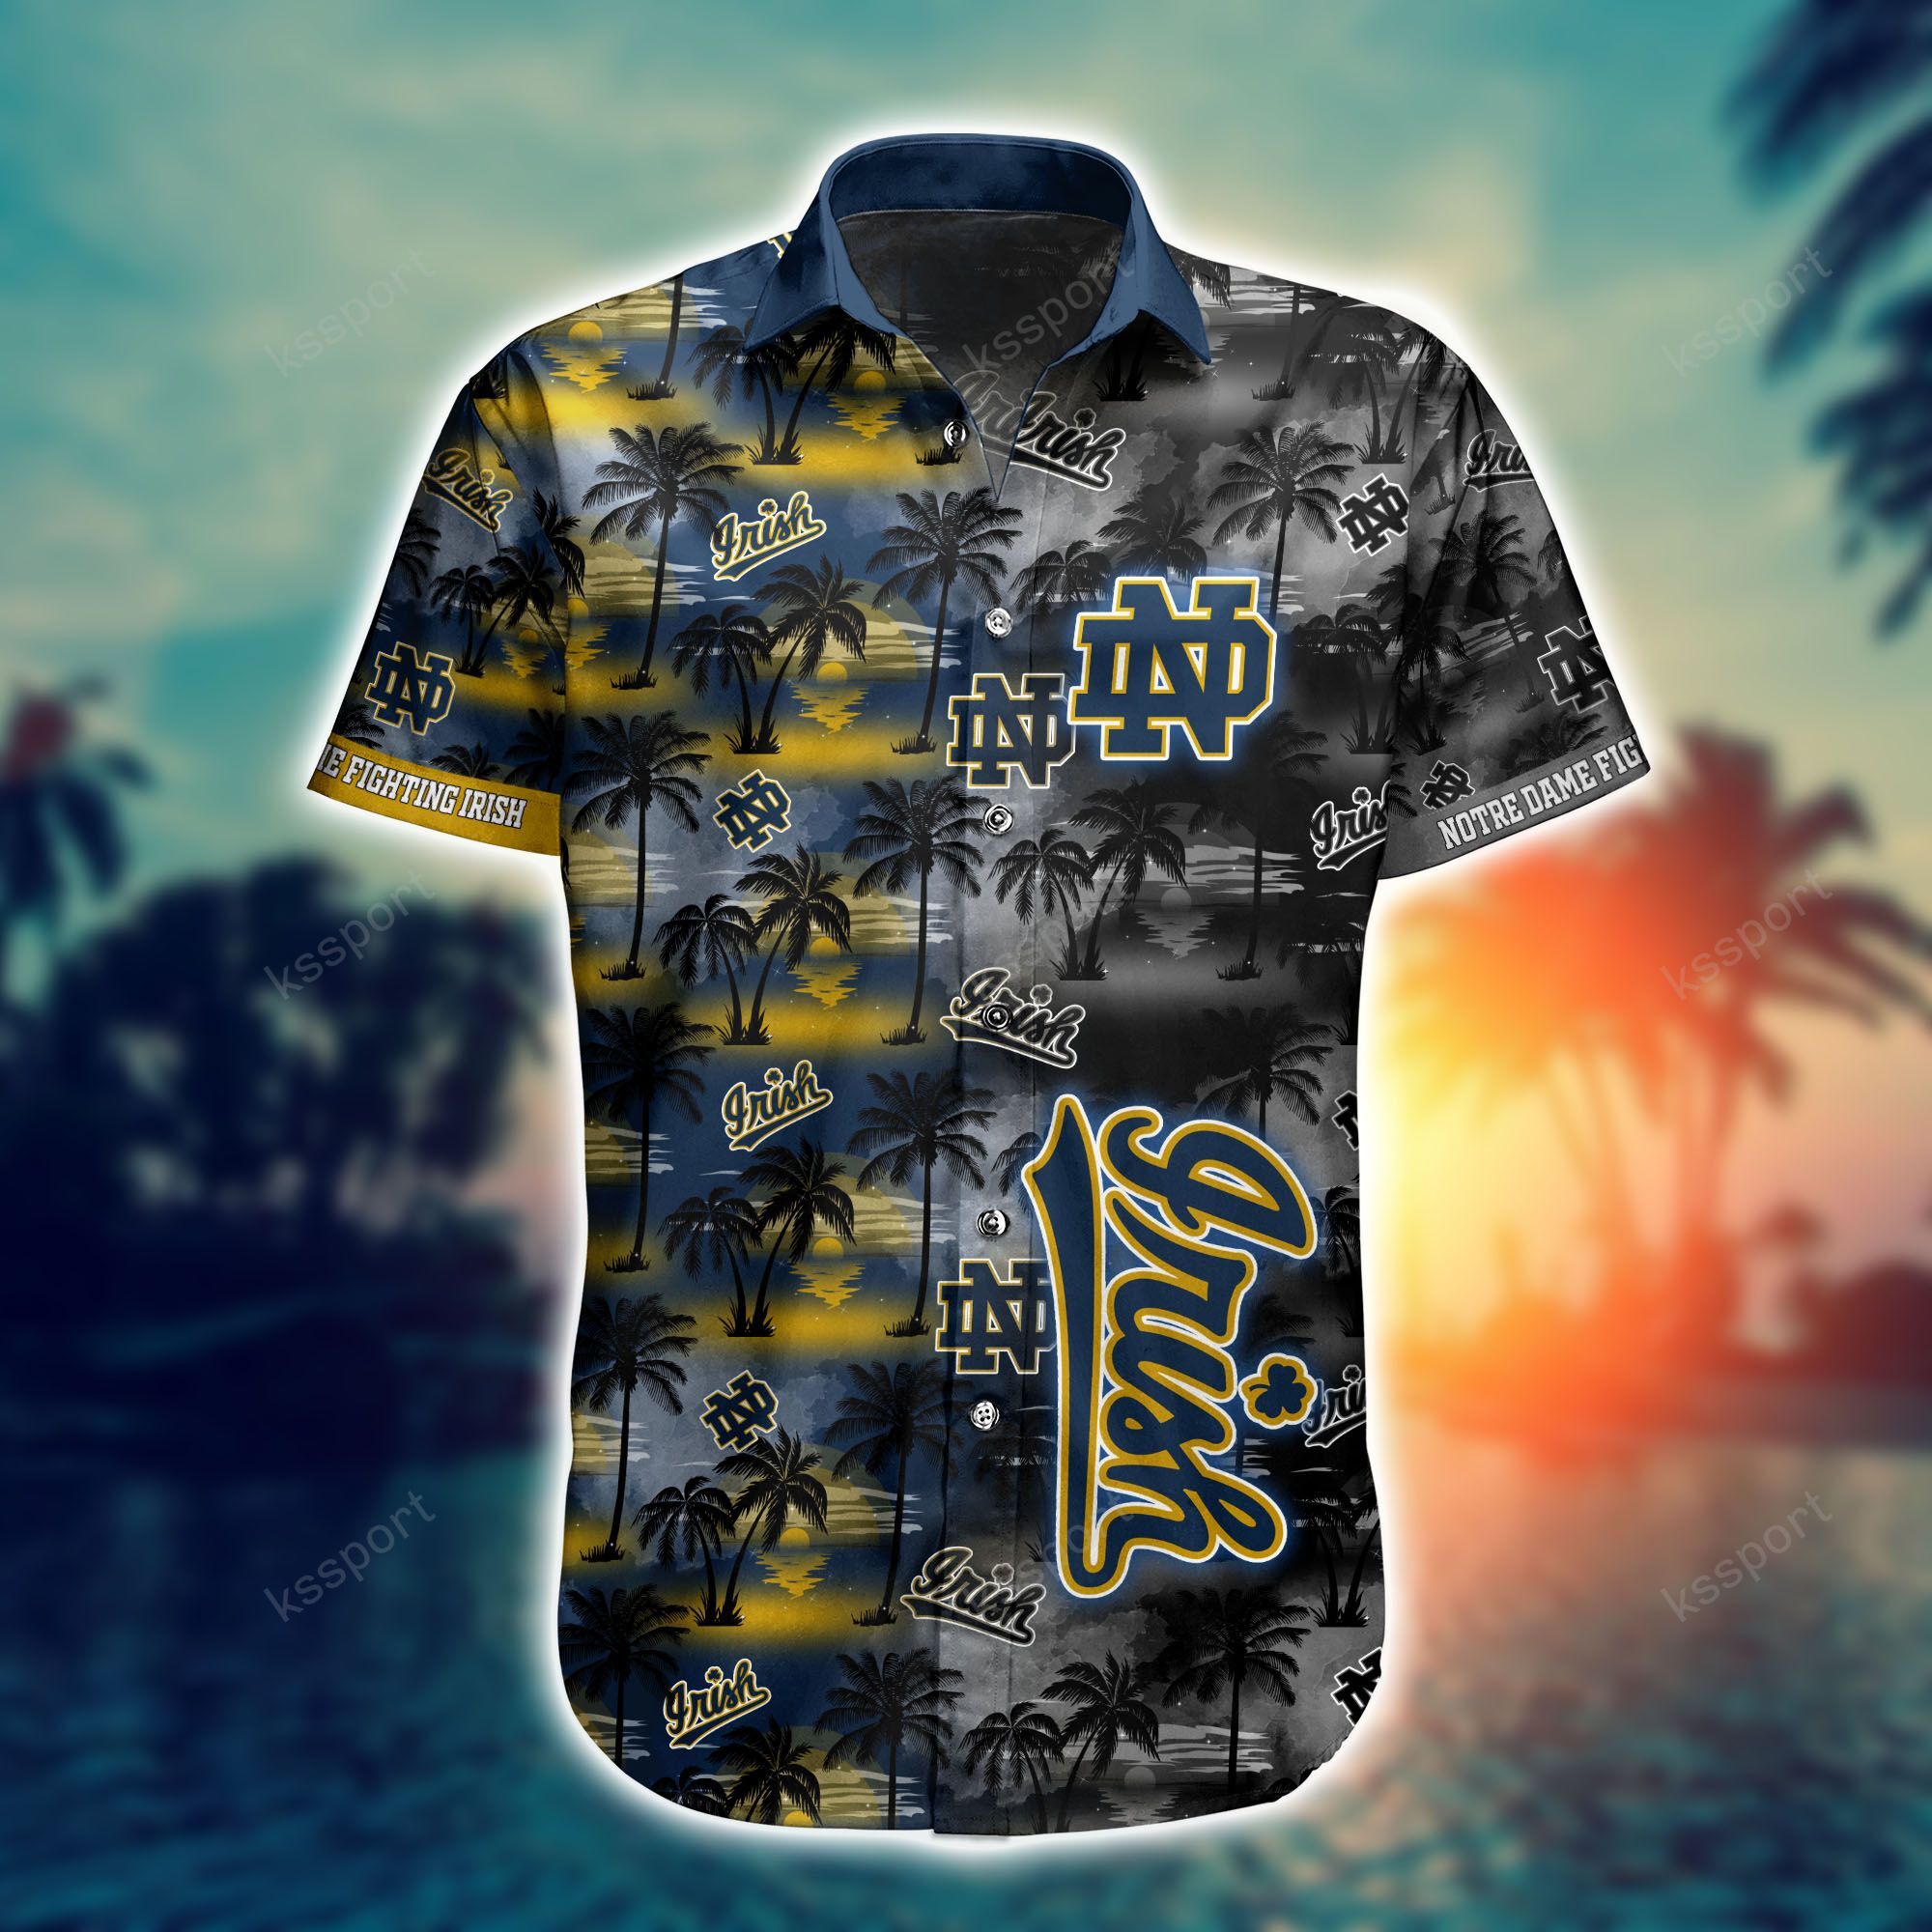 Hawaiian shirt and shorts is a great way to look stylish at a beach party 17